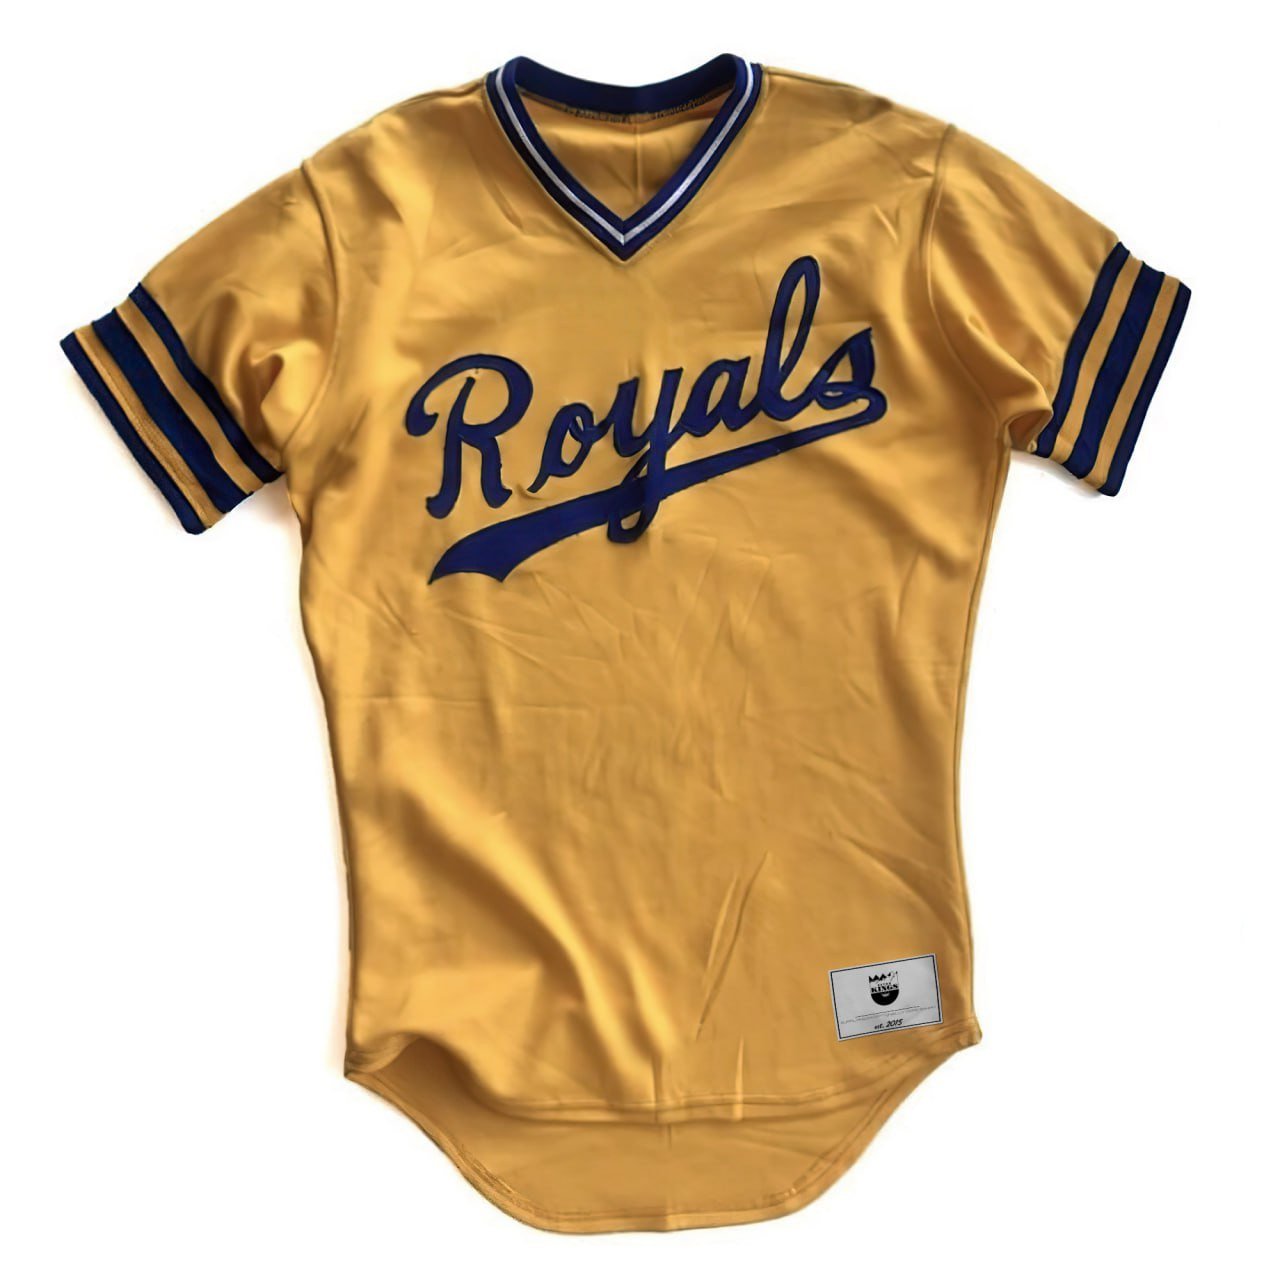 vintage kansas city royals jersey